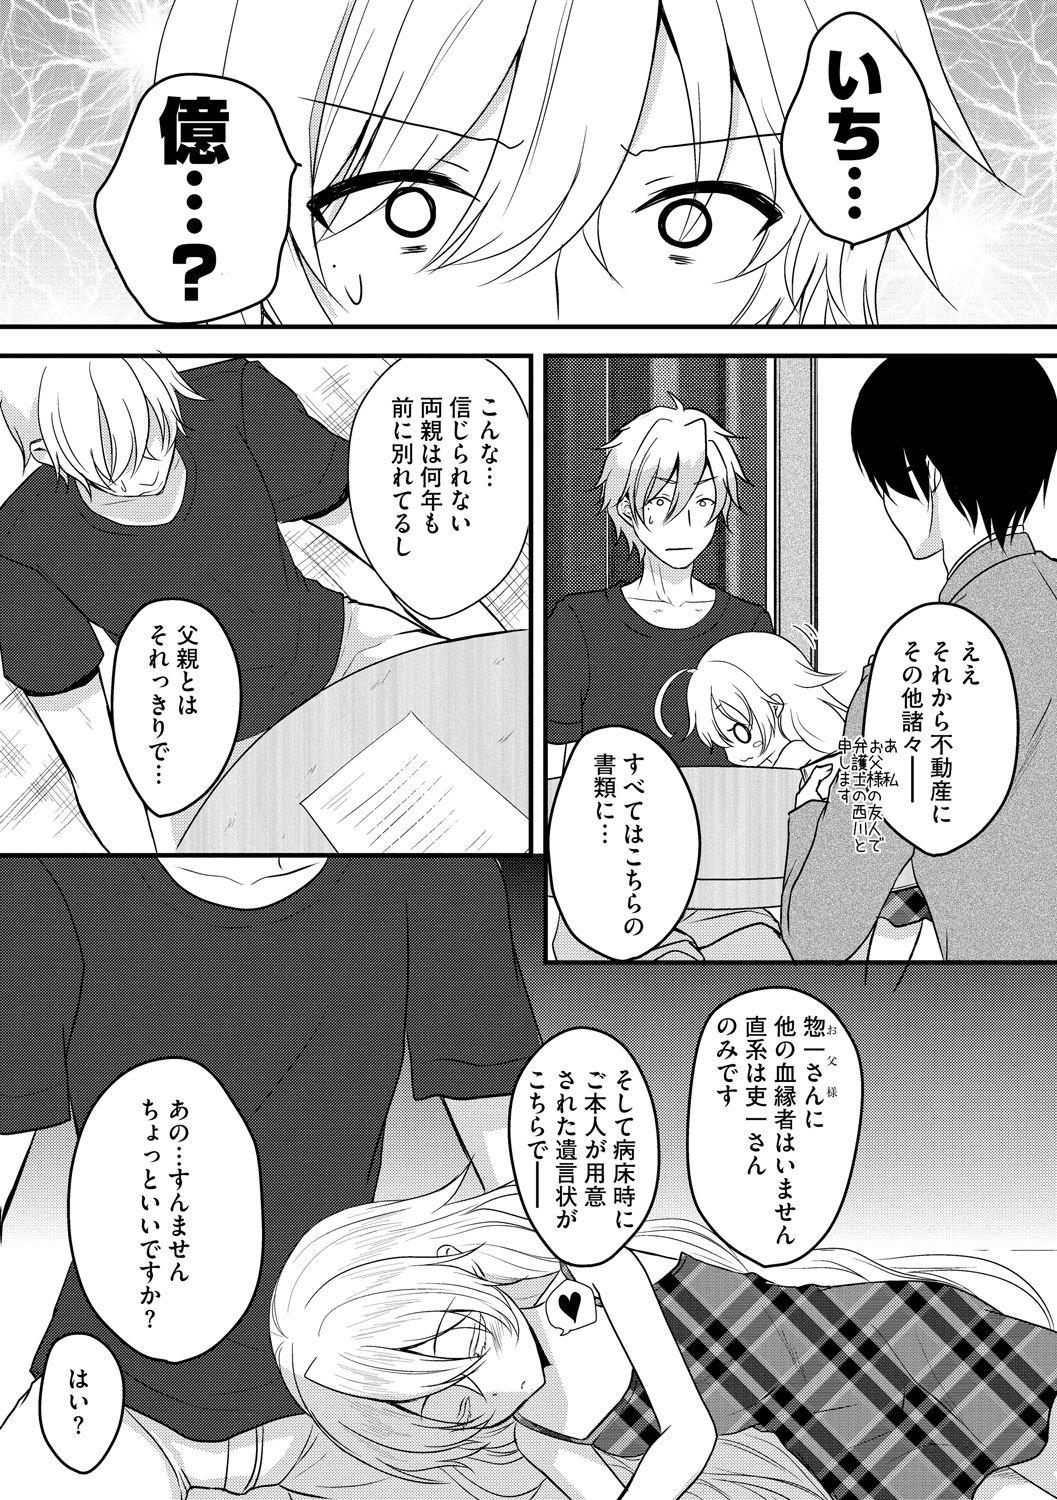 [Utano] Onii-chan to Akarui Kinshin Keikaku - Bright incest plan with Brother [Digital] 164